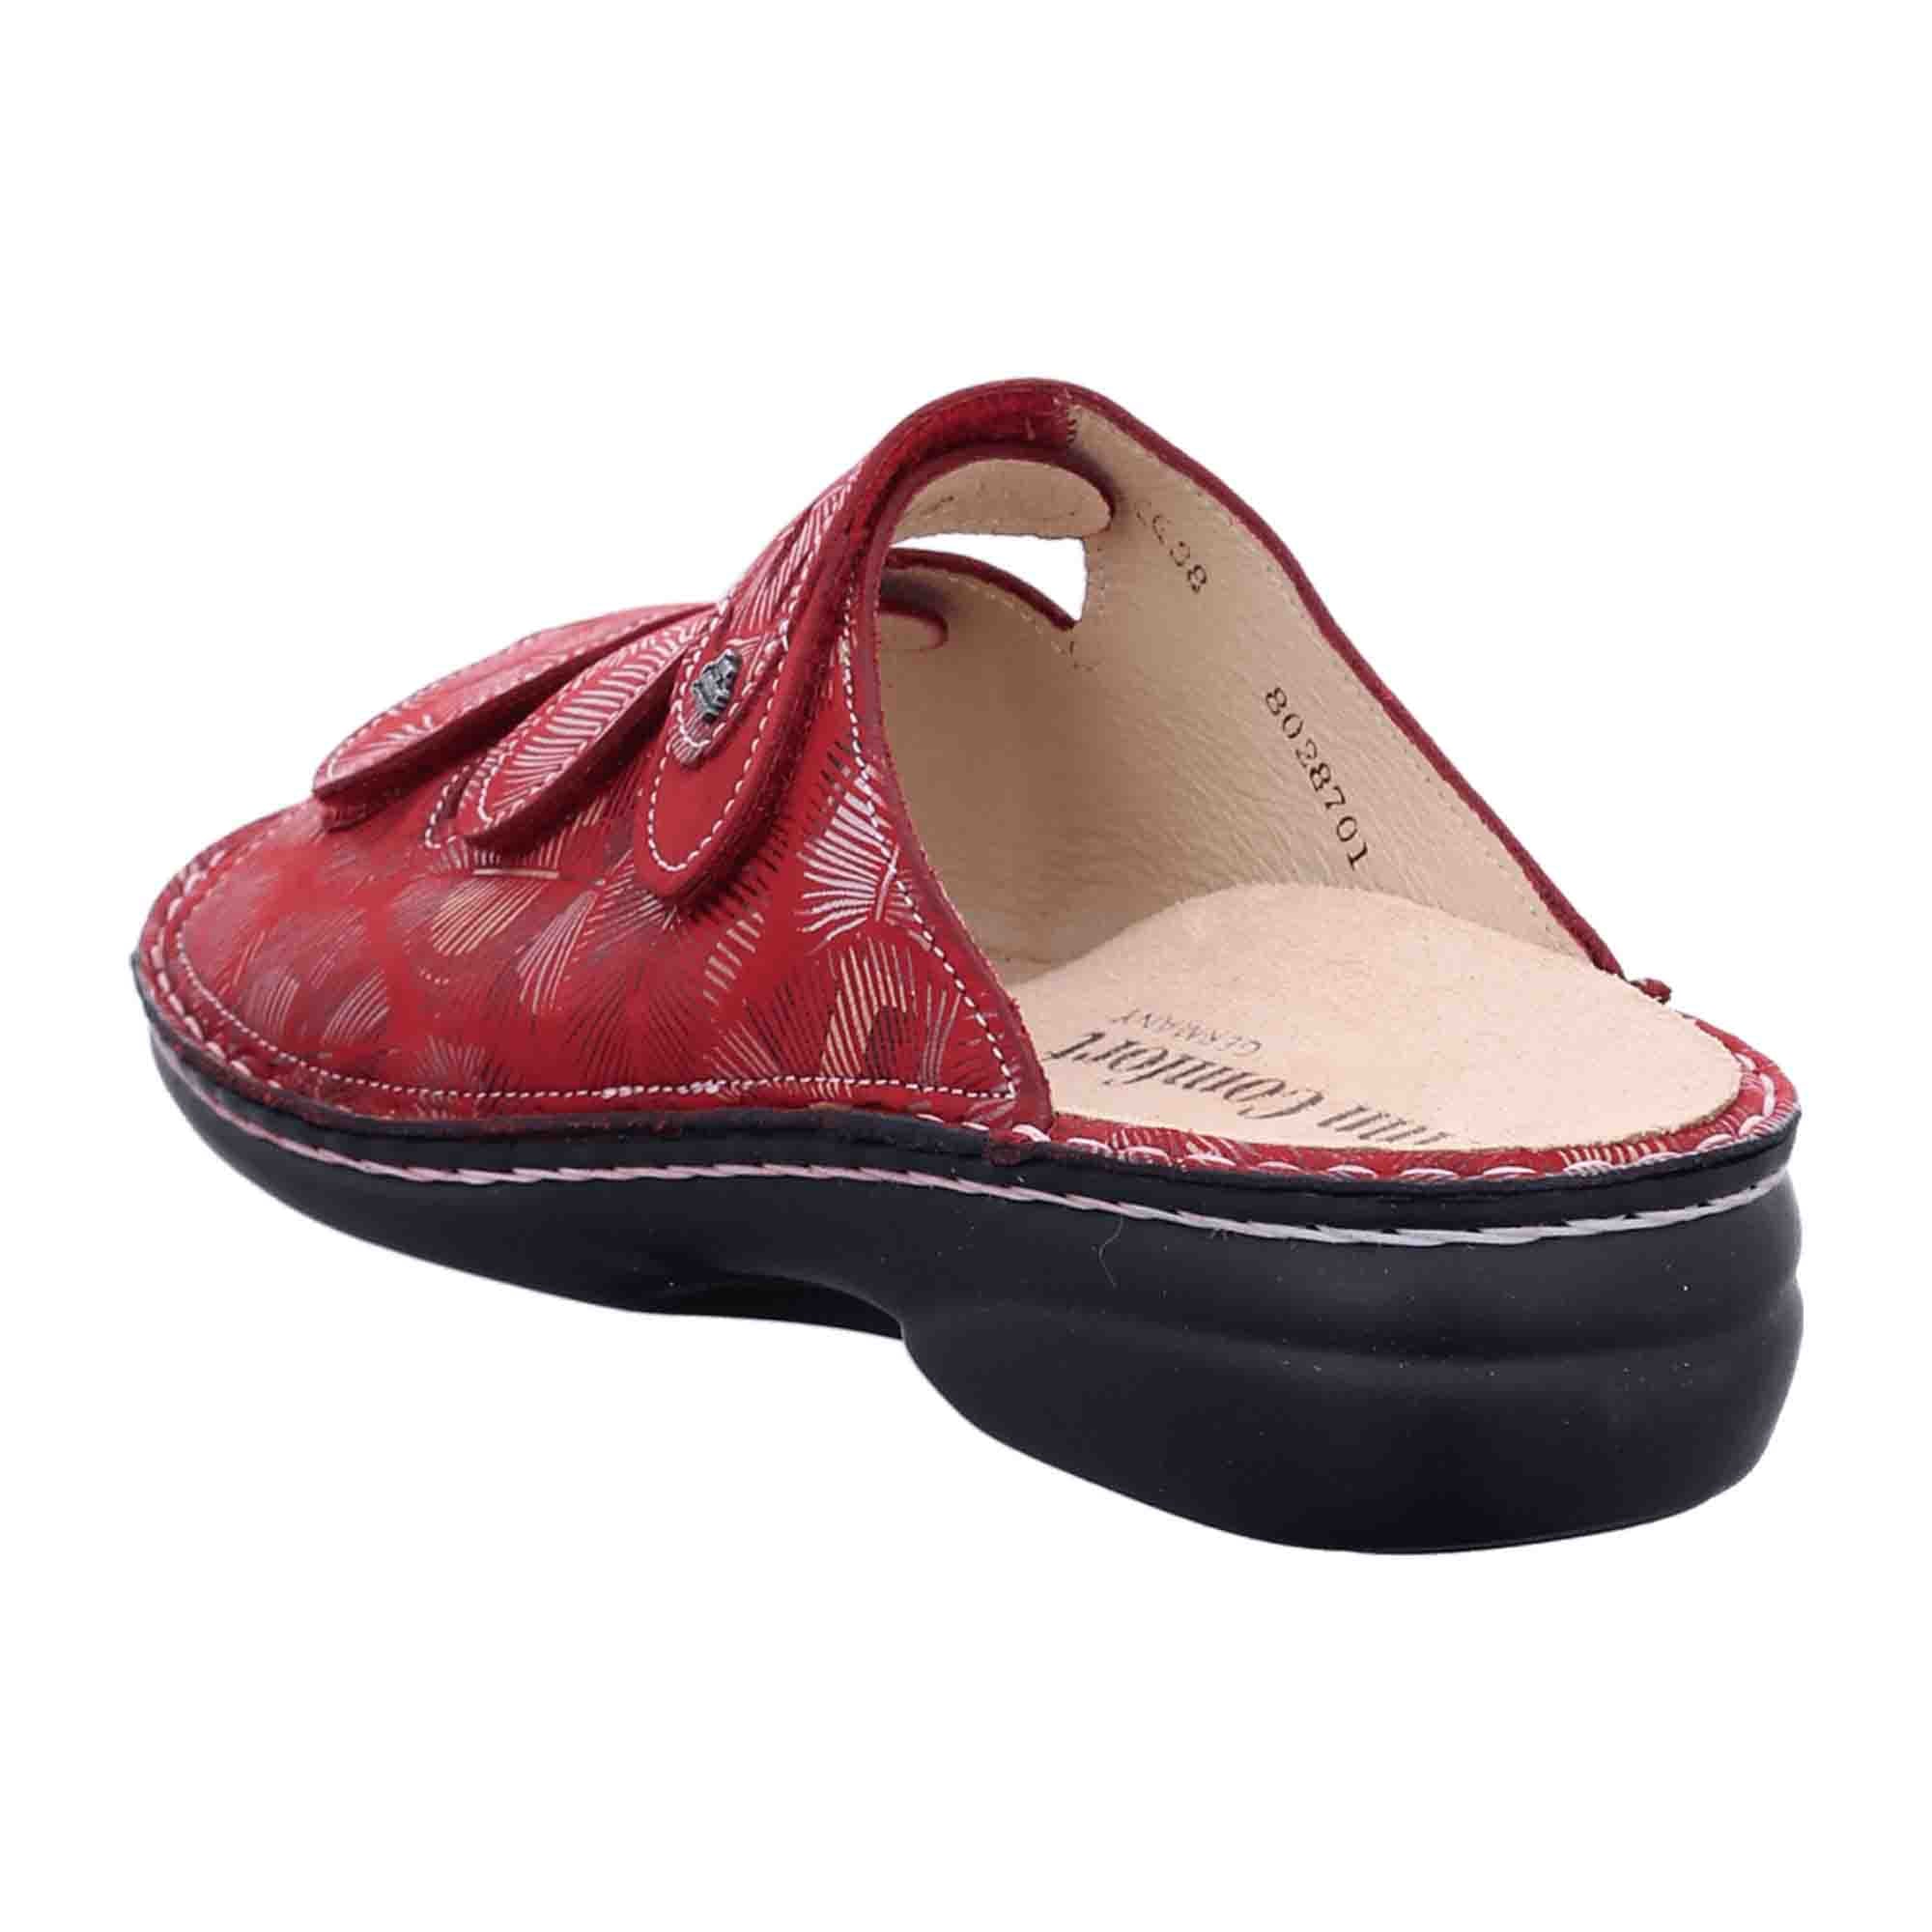 Finn Comfort Kos Red Sandals for Women | Stylish & Durable Comfort Footwear